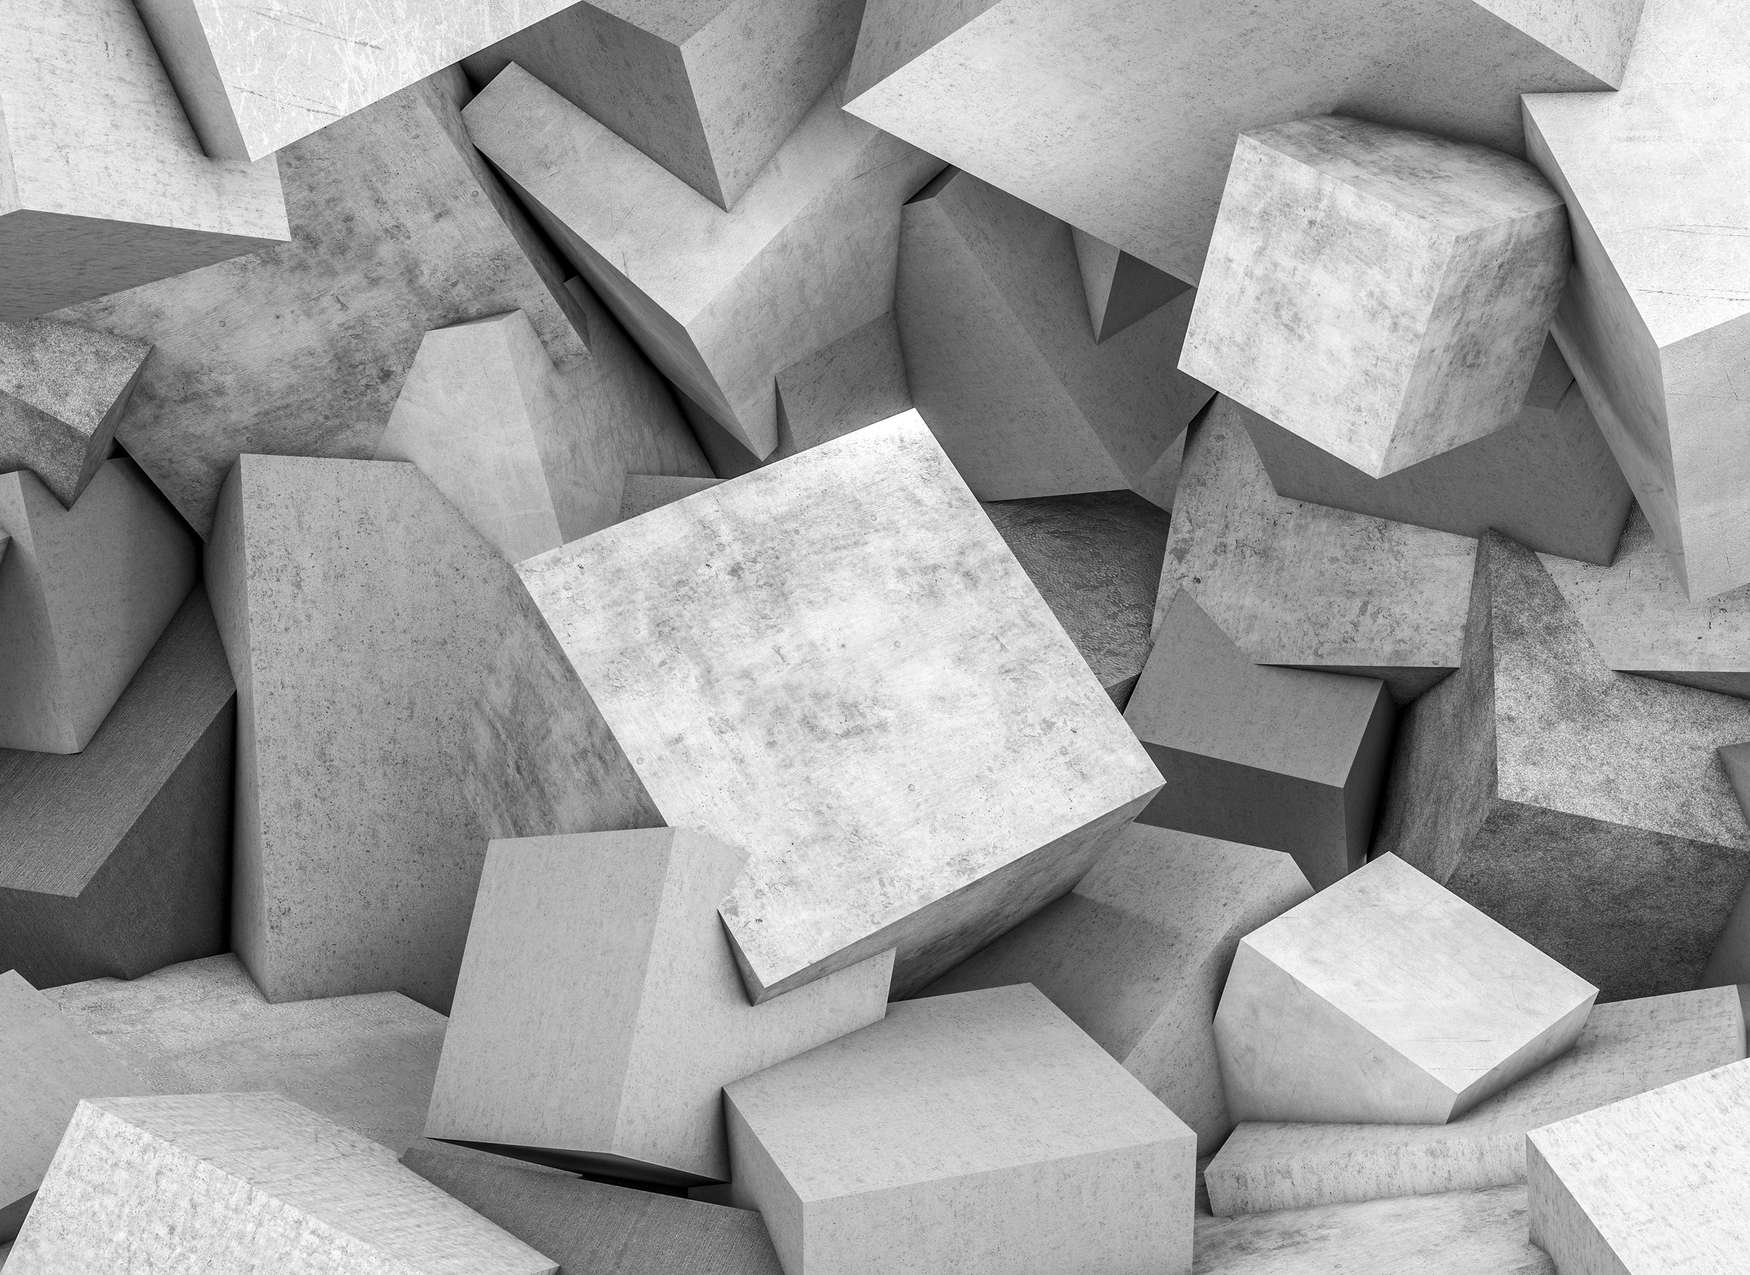             Concrete blocks with 3D look photo wallpaper - Grey
        